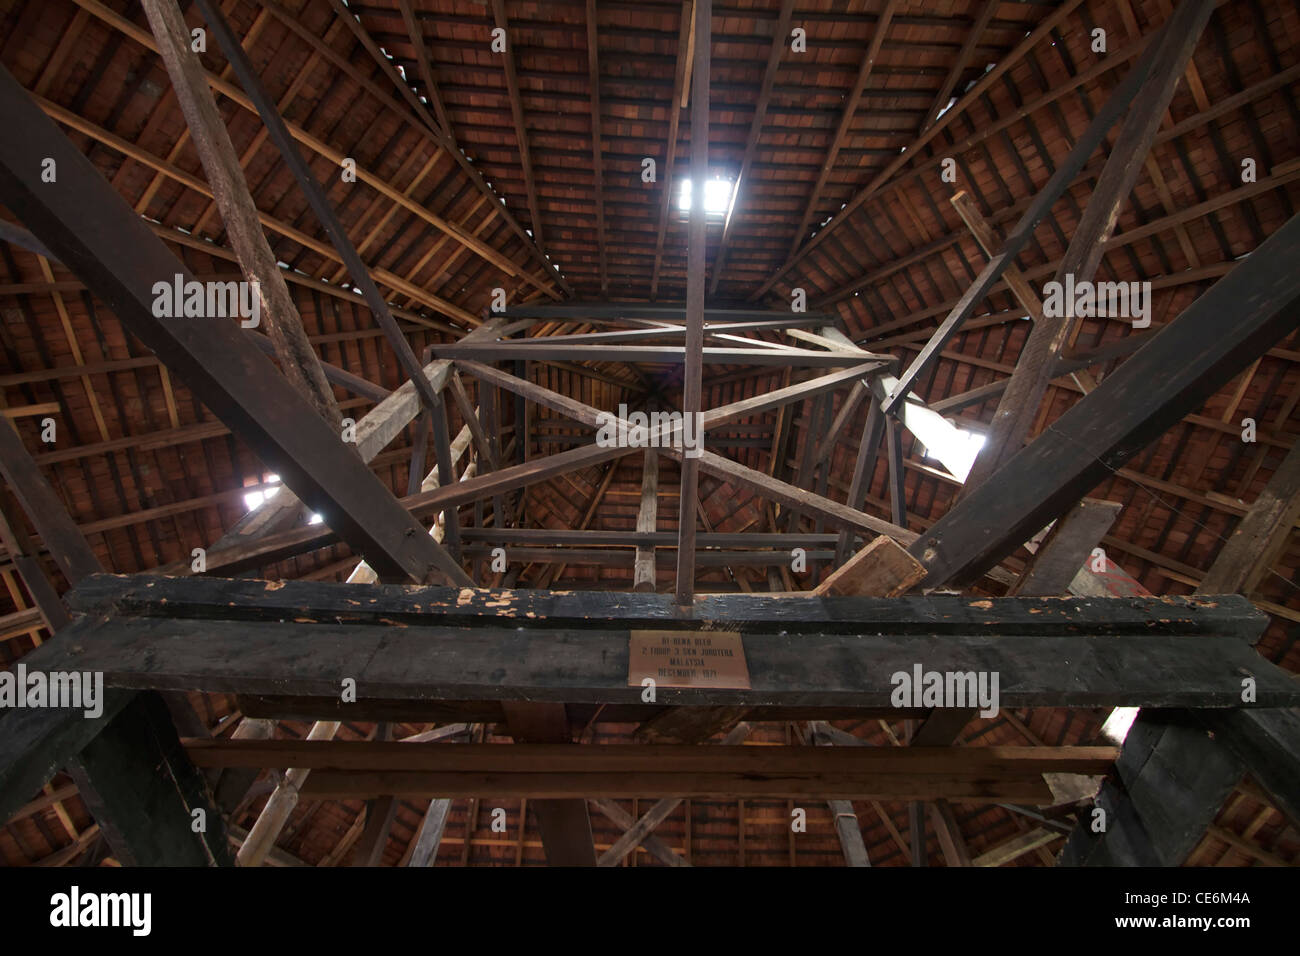 Inside traditional longhouse, sarawak Stock Photo